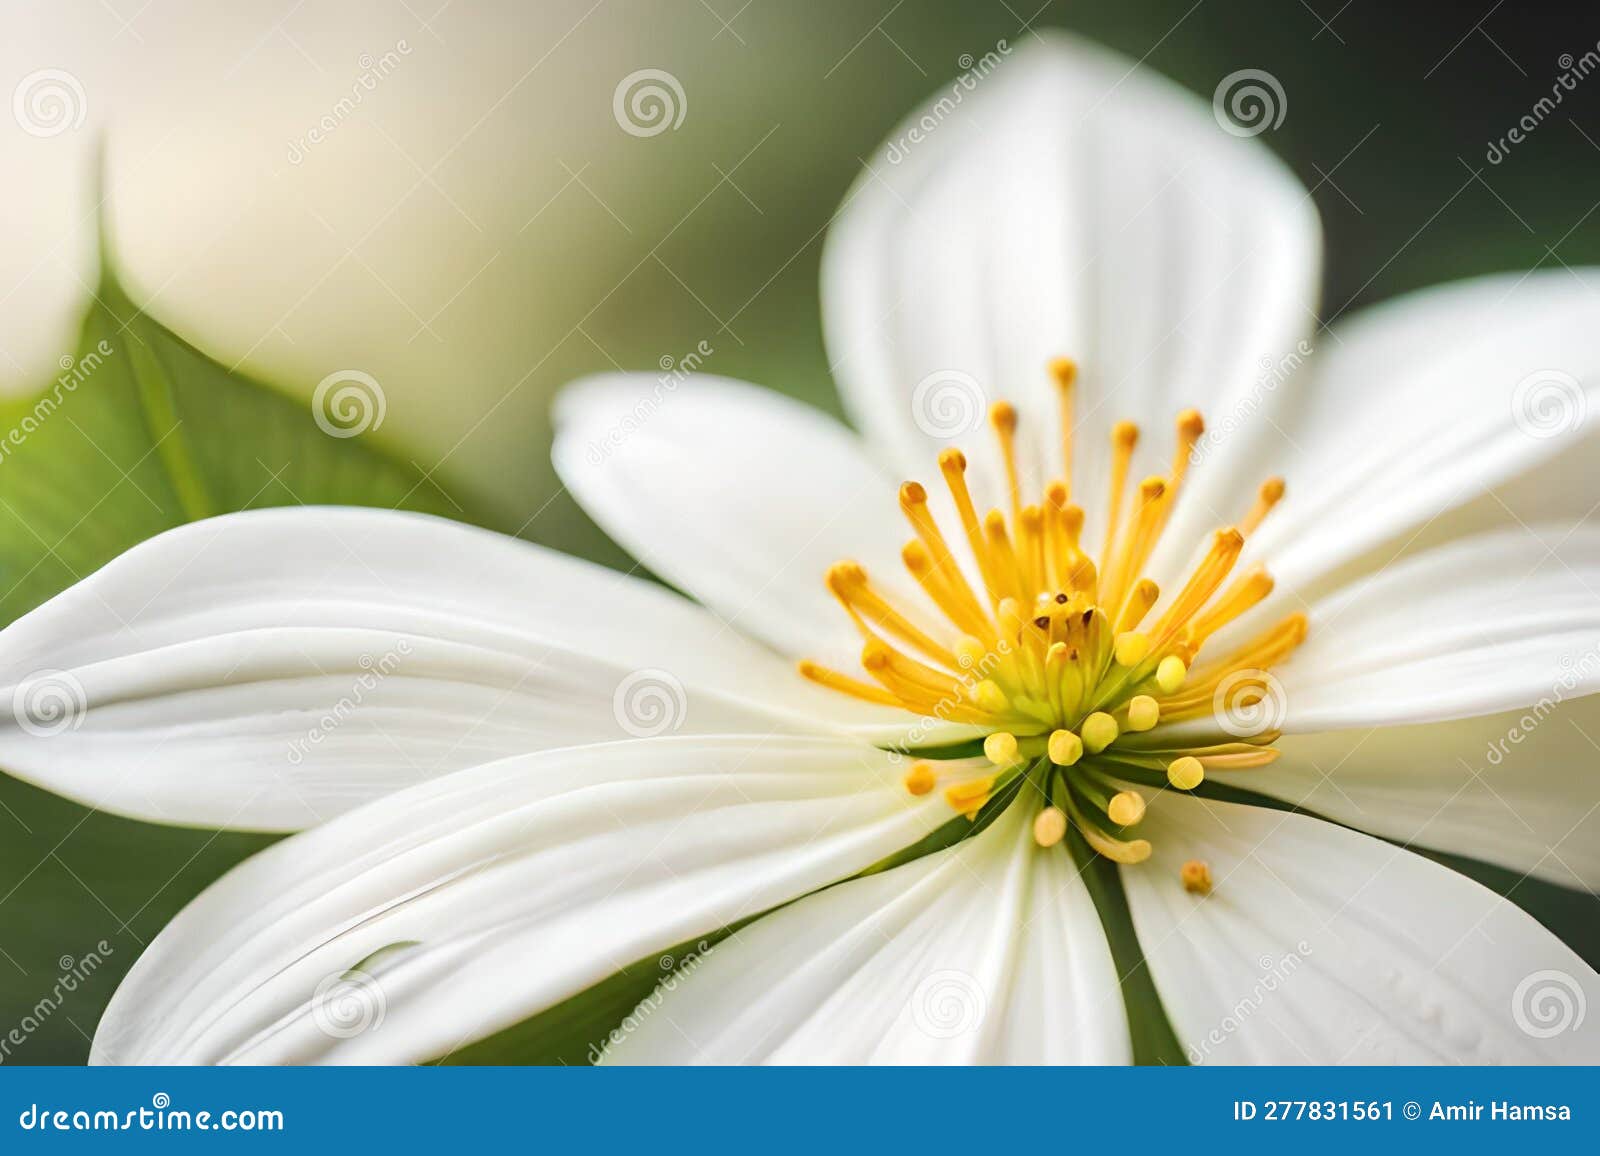 White jasmine flower stock illustration. Illustration of unassuming ...